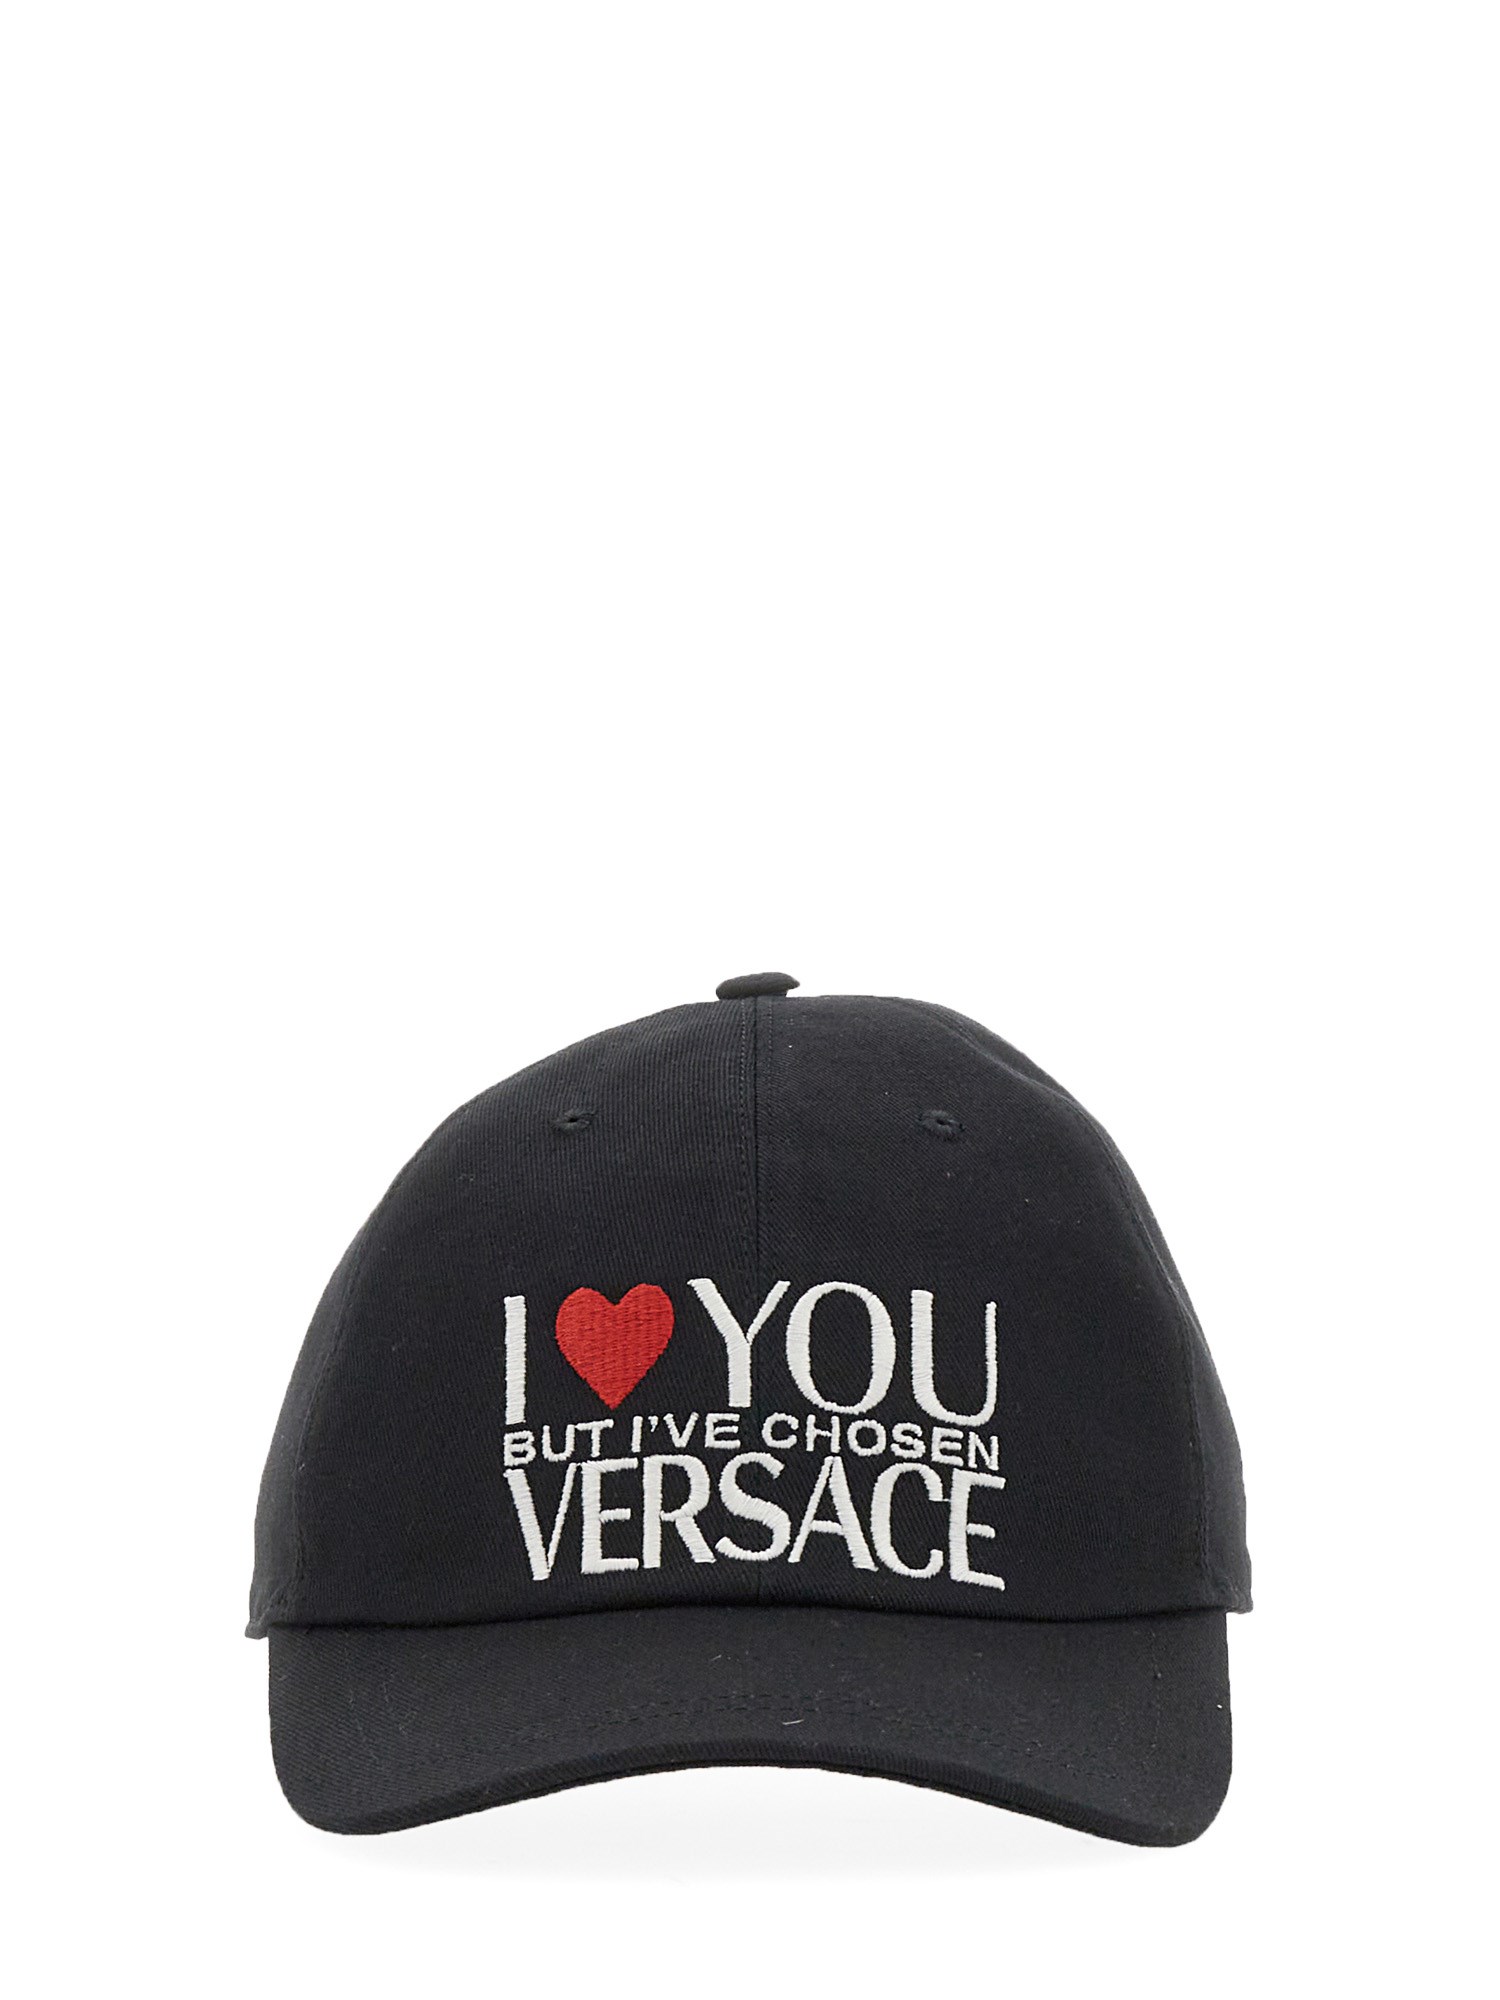 versace baseball hat with logo